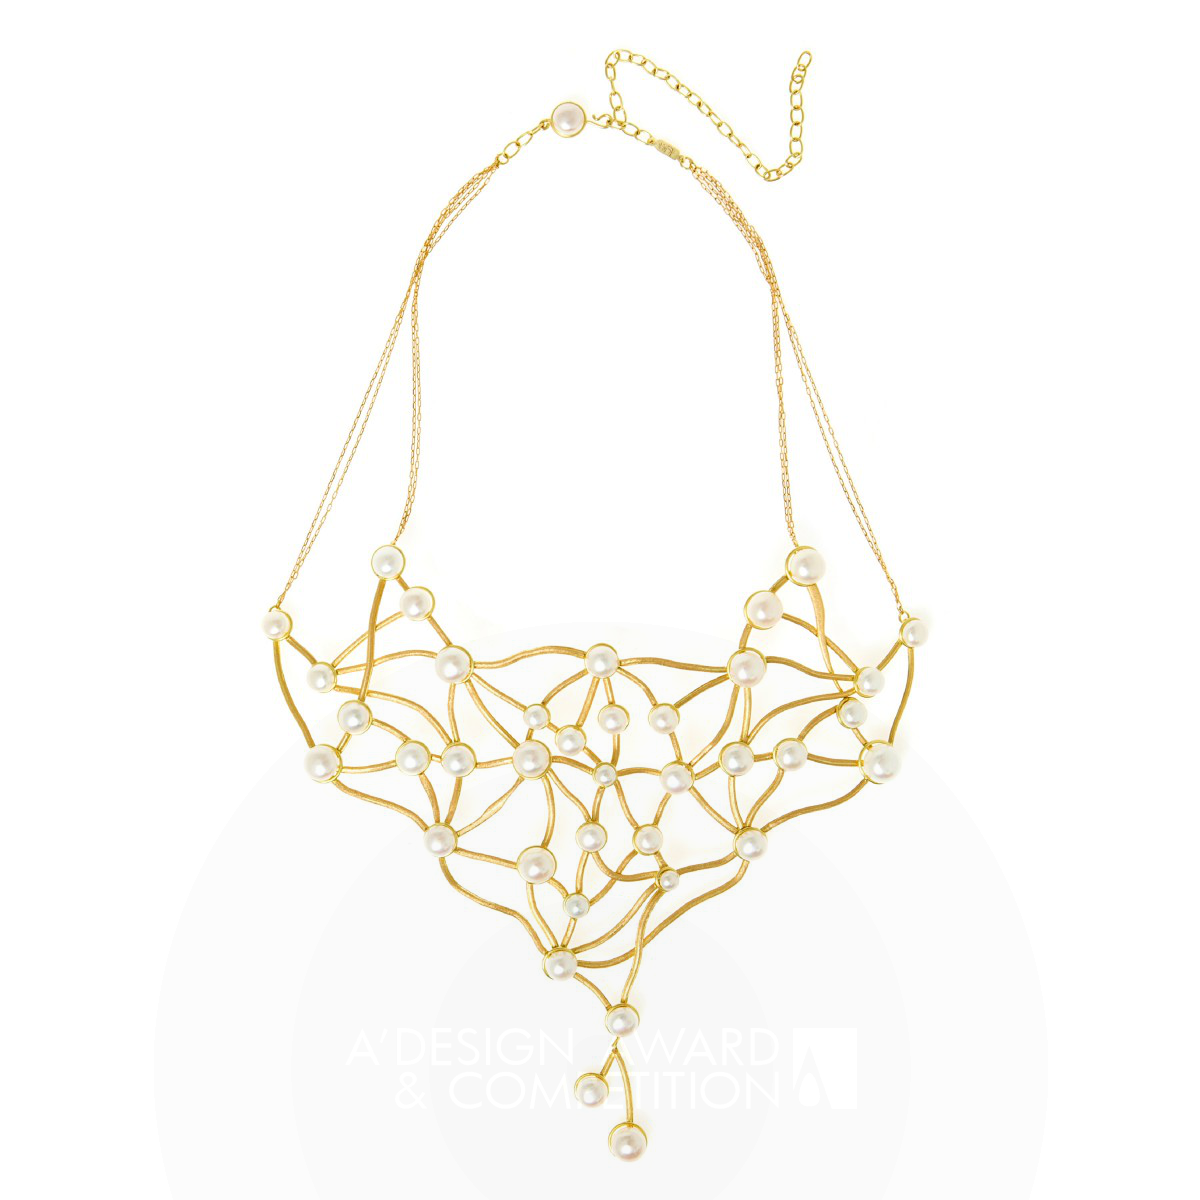 Van Gogh's Rosebush Necklace by Larissa Moraes Silver Jewelry Design Award Winner 2021 